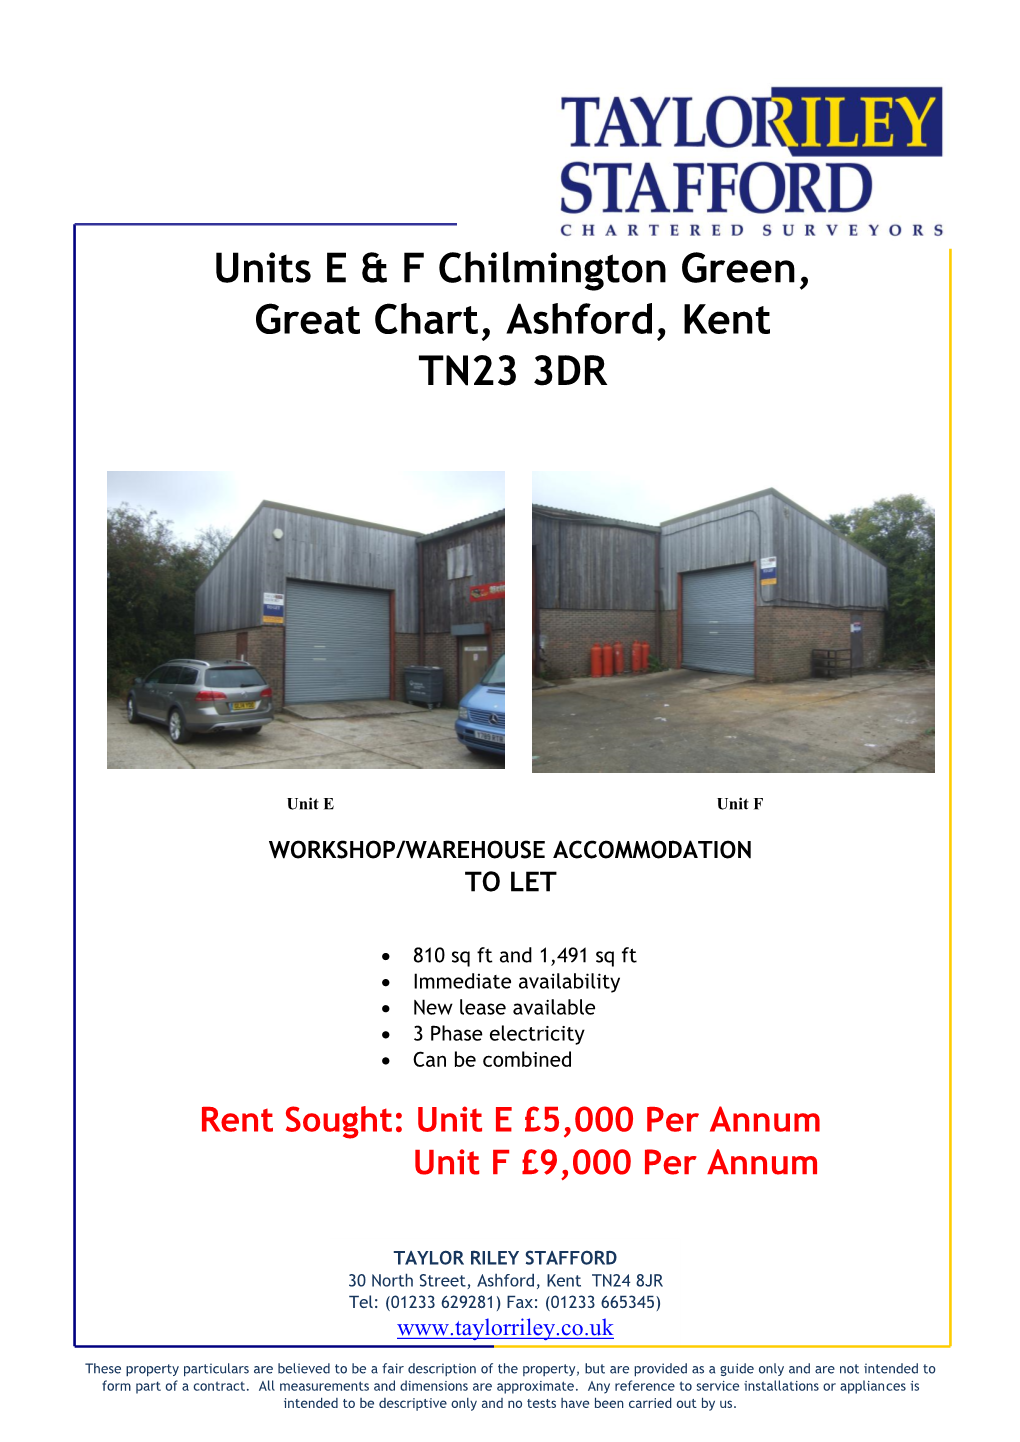 Units E & F Chilmington Green, Great Chart, Ashford, Kent TN23